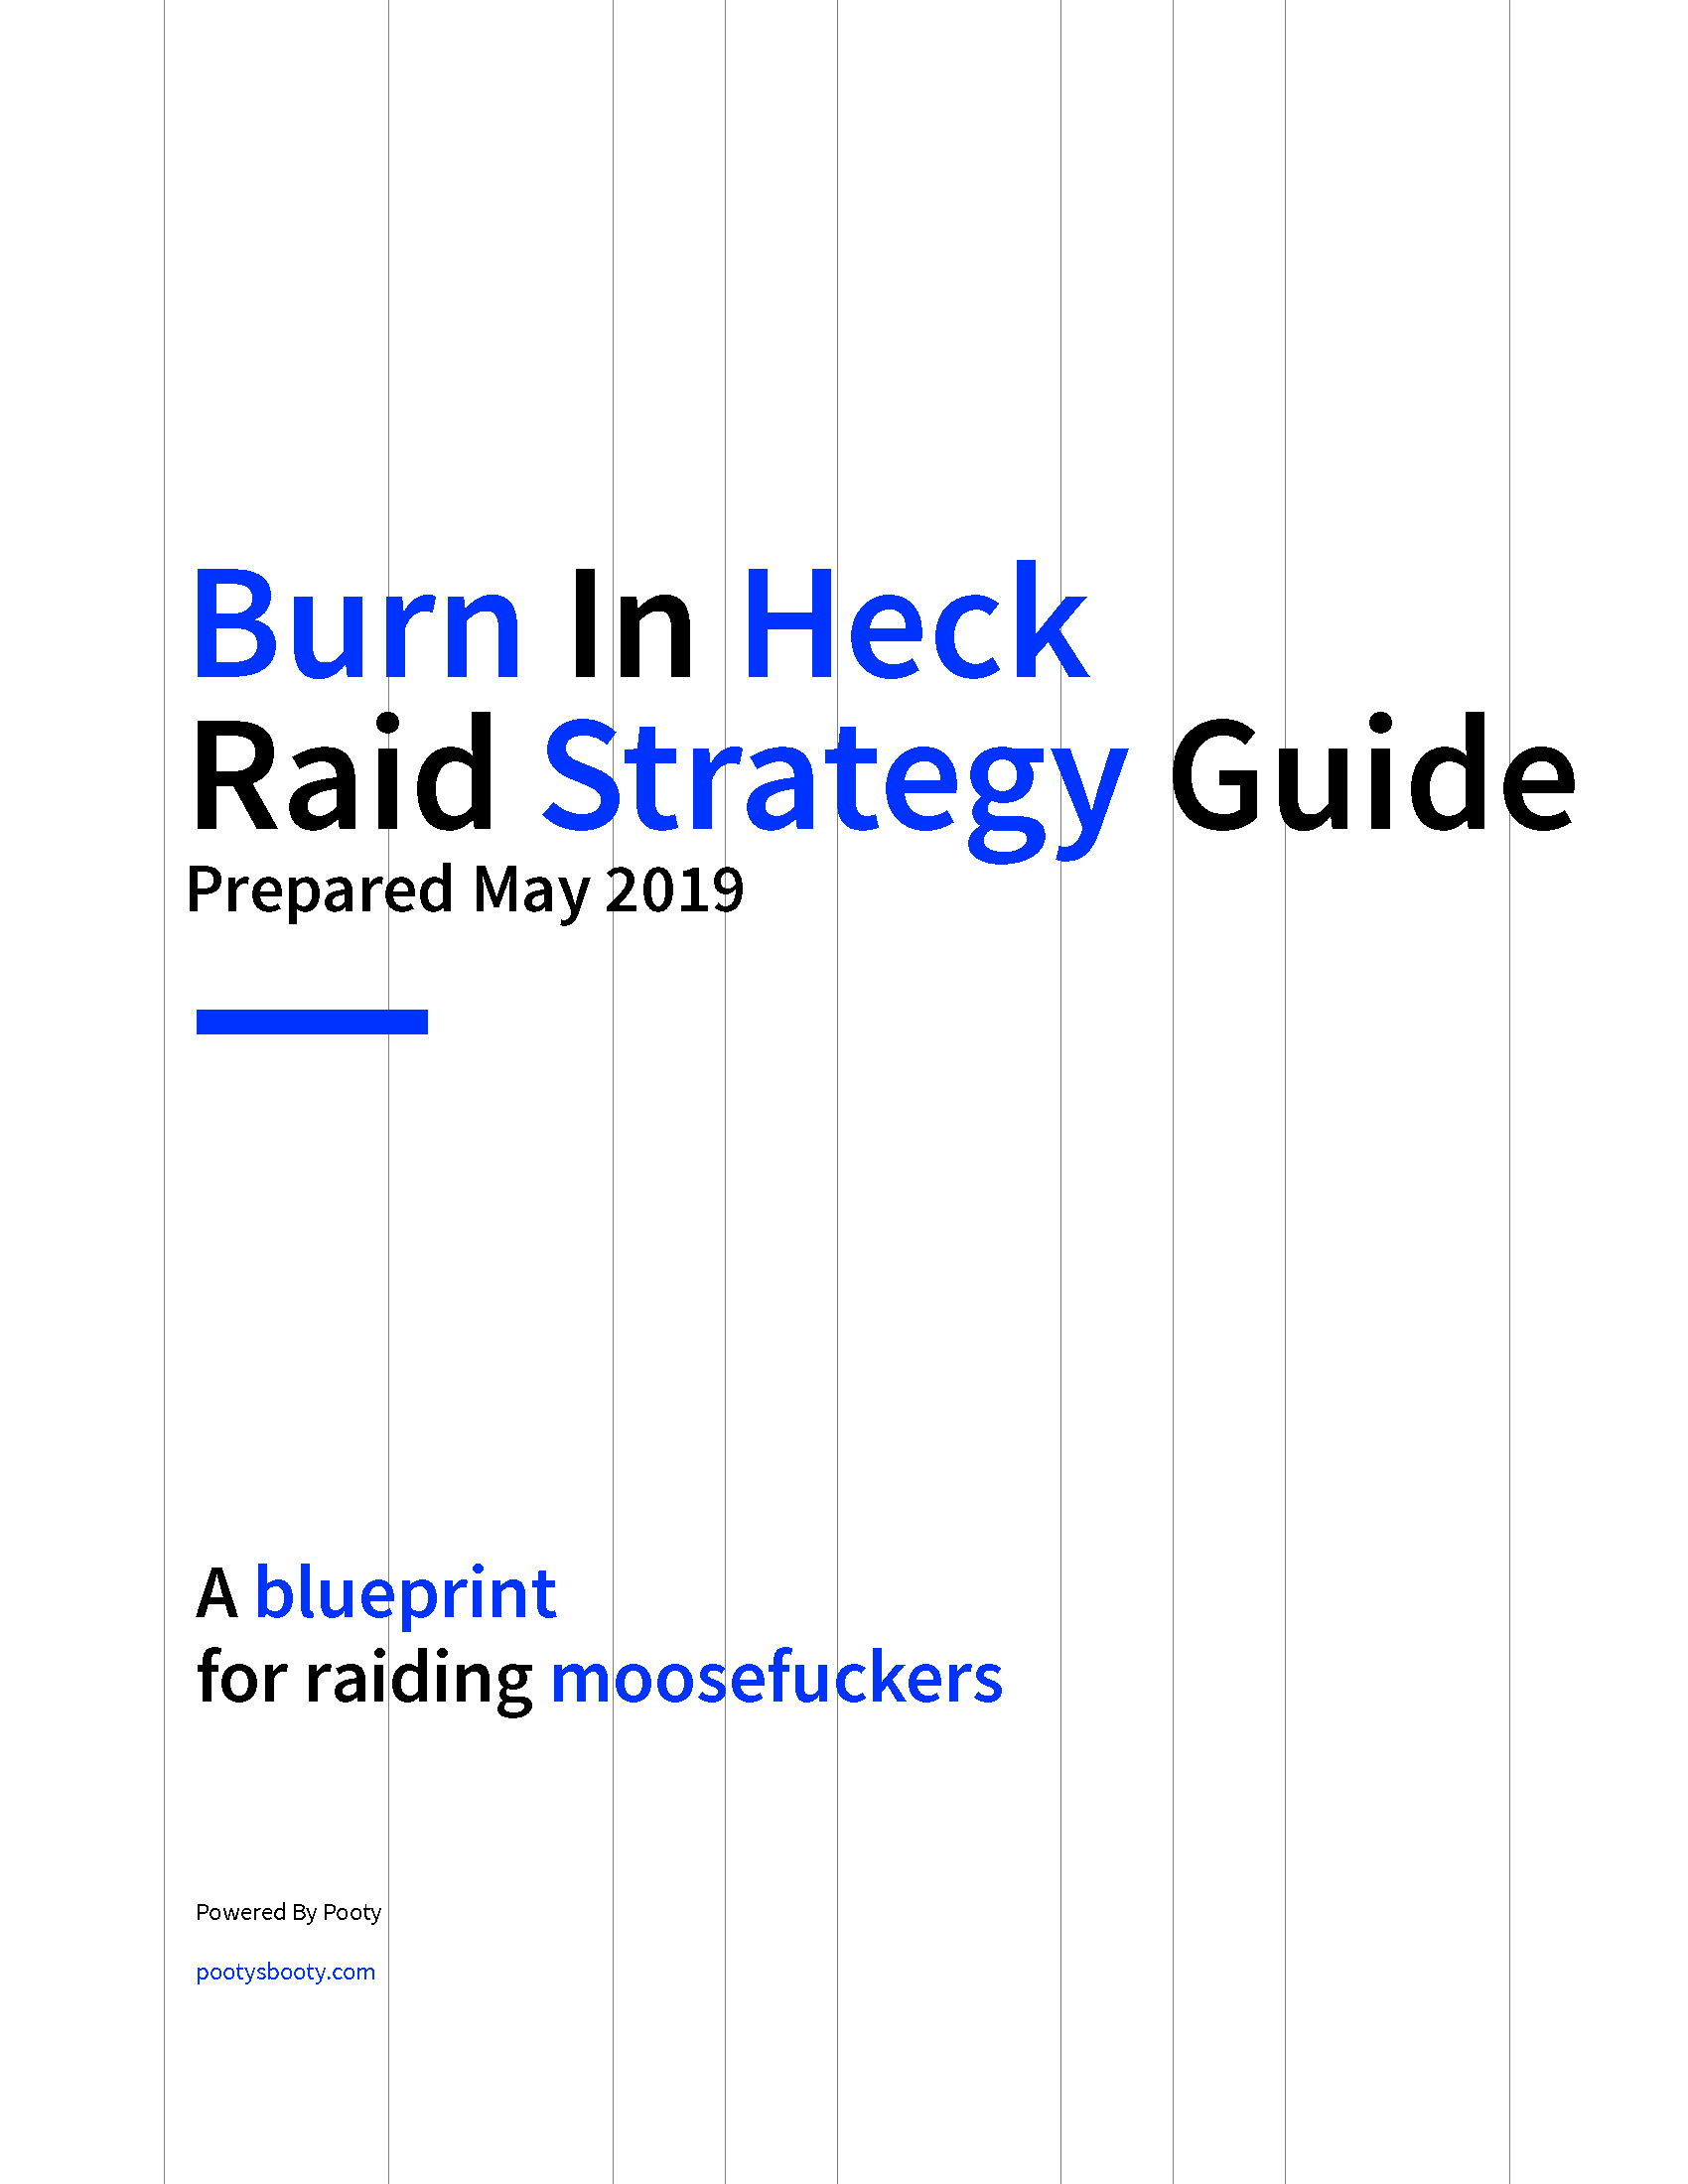 BIH_Raid_Strategy_Guide_v2_Page_1